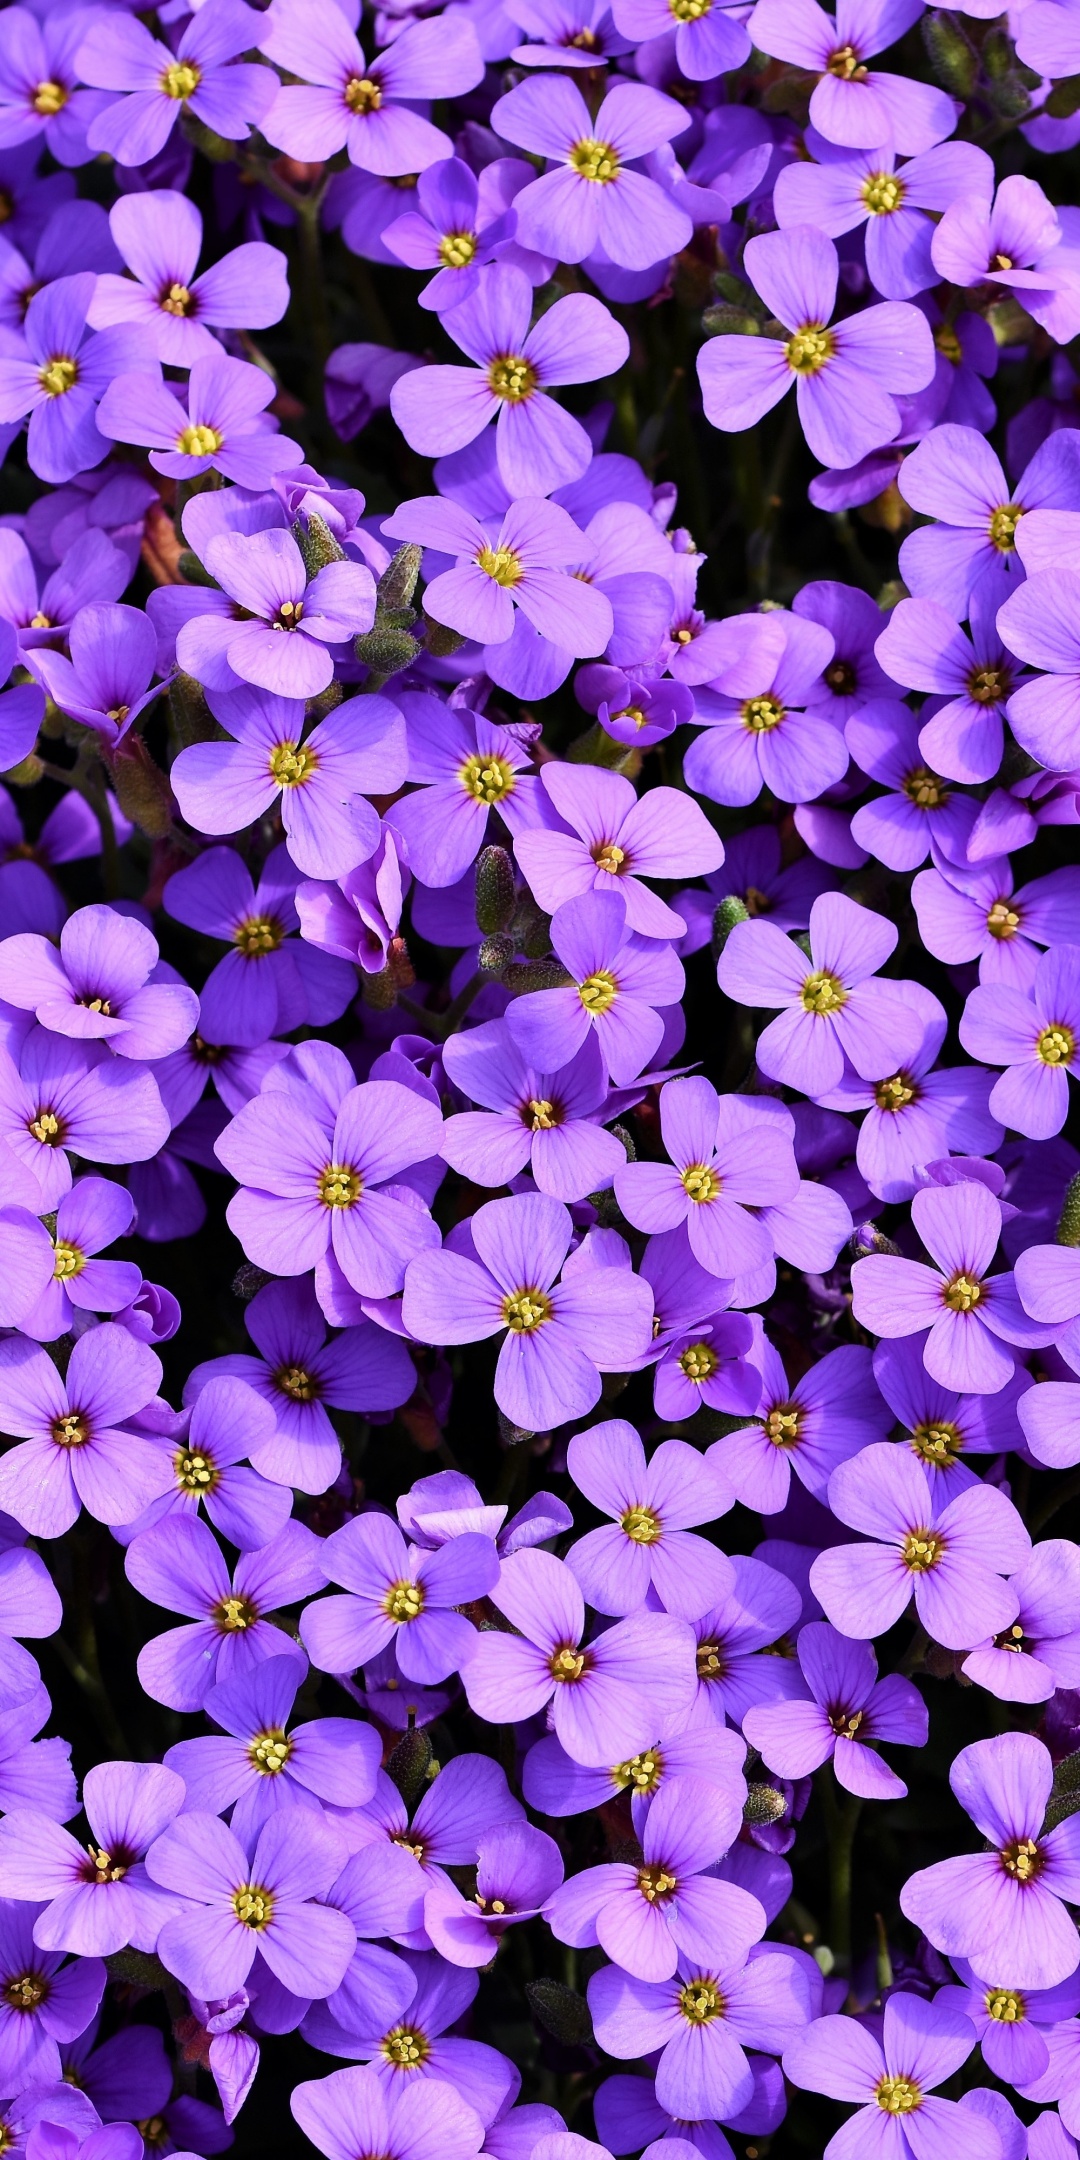 Aubrieta 4K Wallpaper, Violet flowers, Blossom, Spring, Bloom, Purple